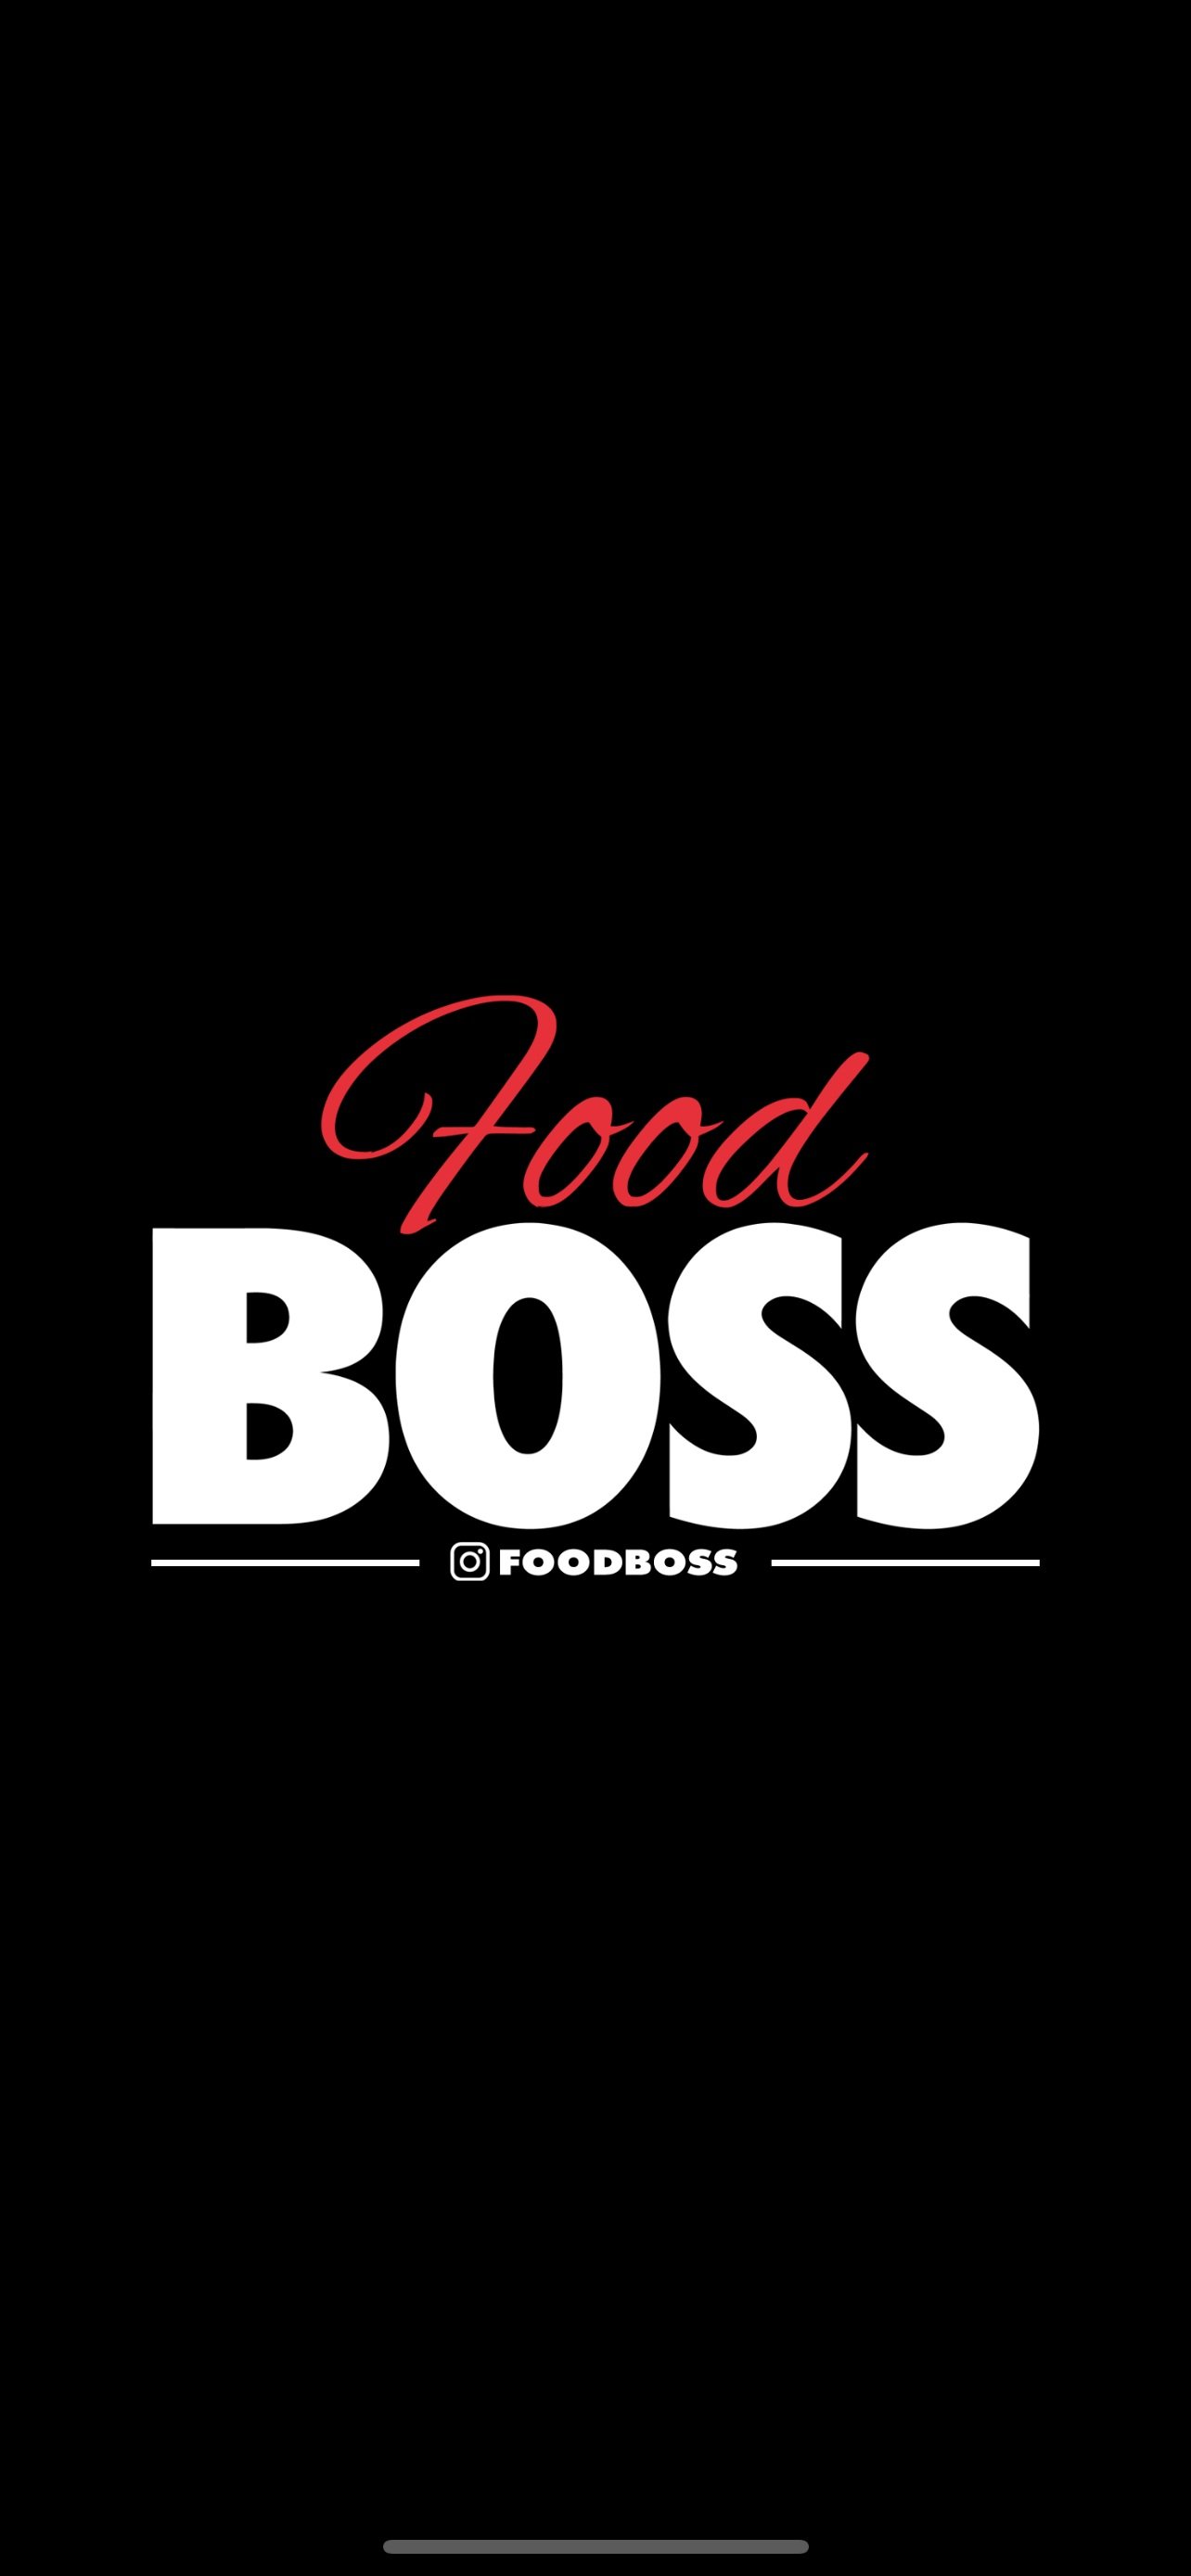 The Food Boss